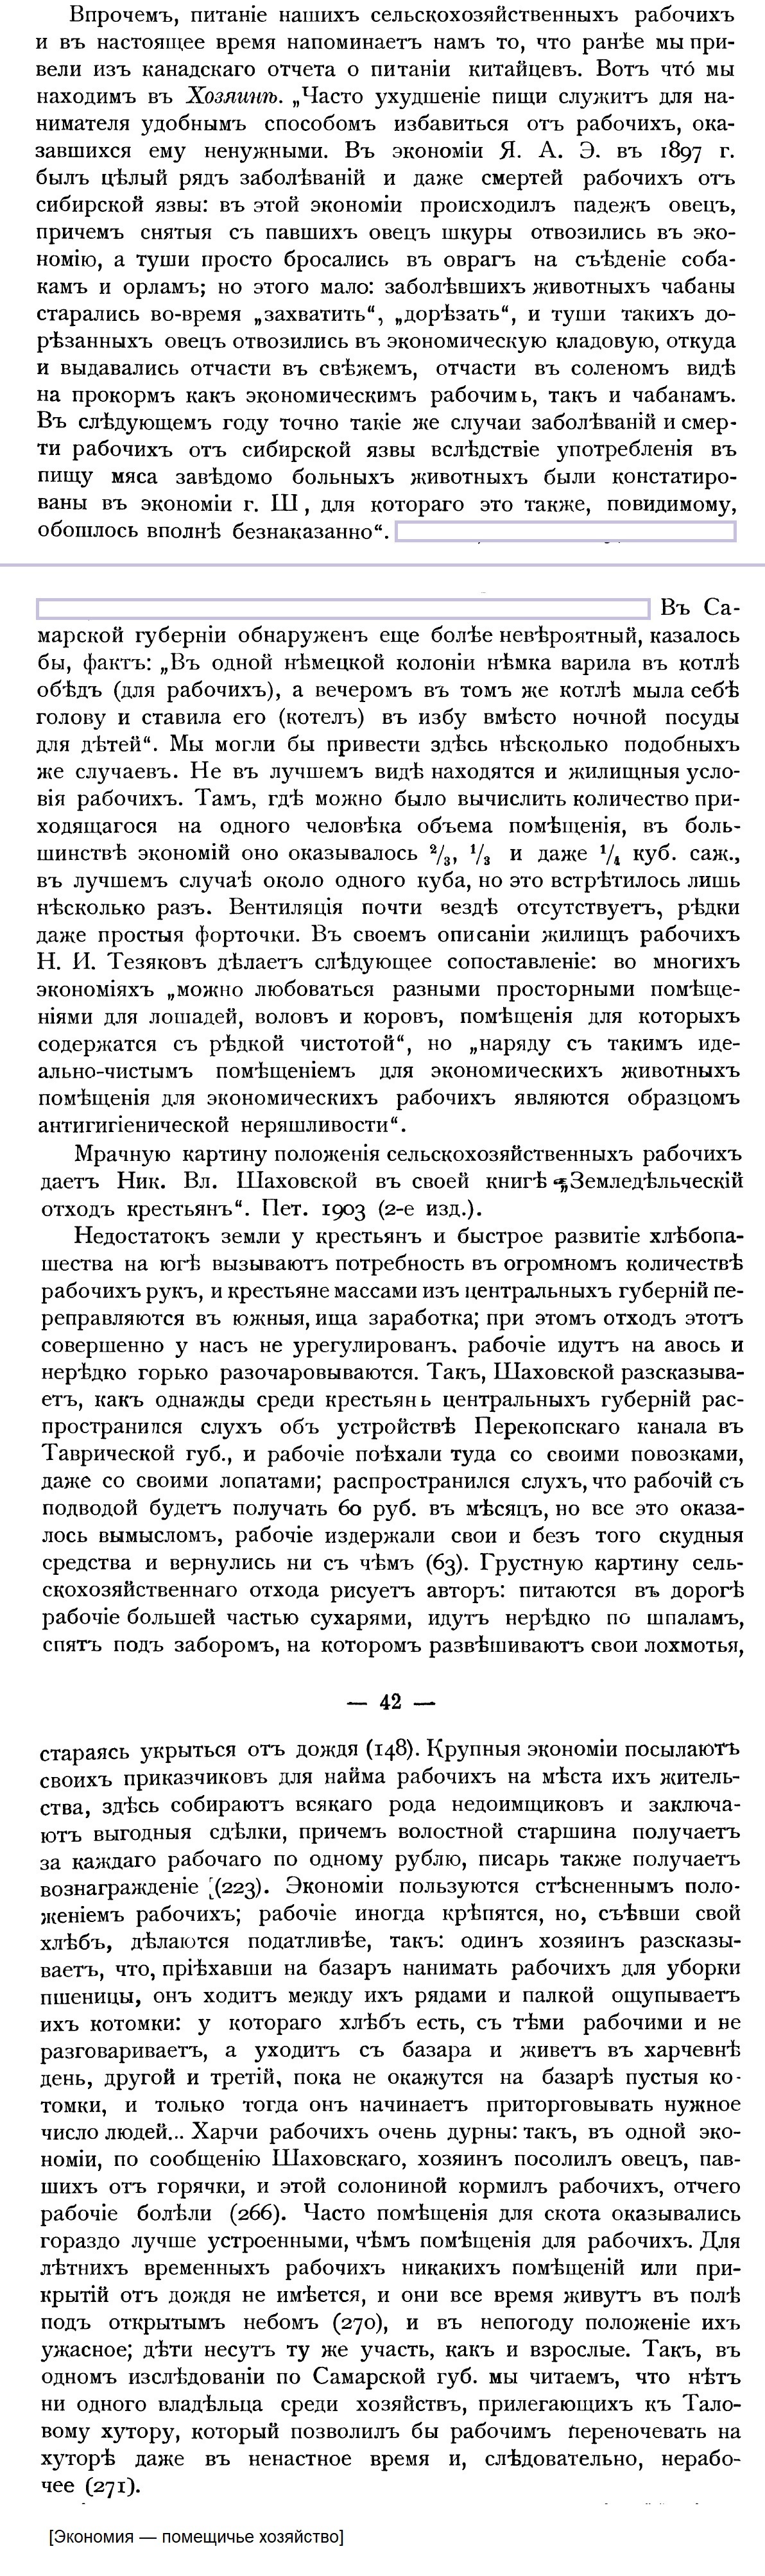 pre-revolutionary workers. Number 3 - Politics, Negative, Российская империя, Pre-revolutionary Russia, Workers, Nutrition, Longpost